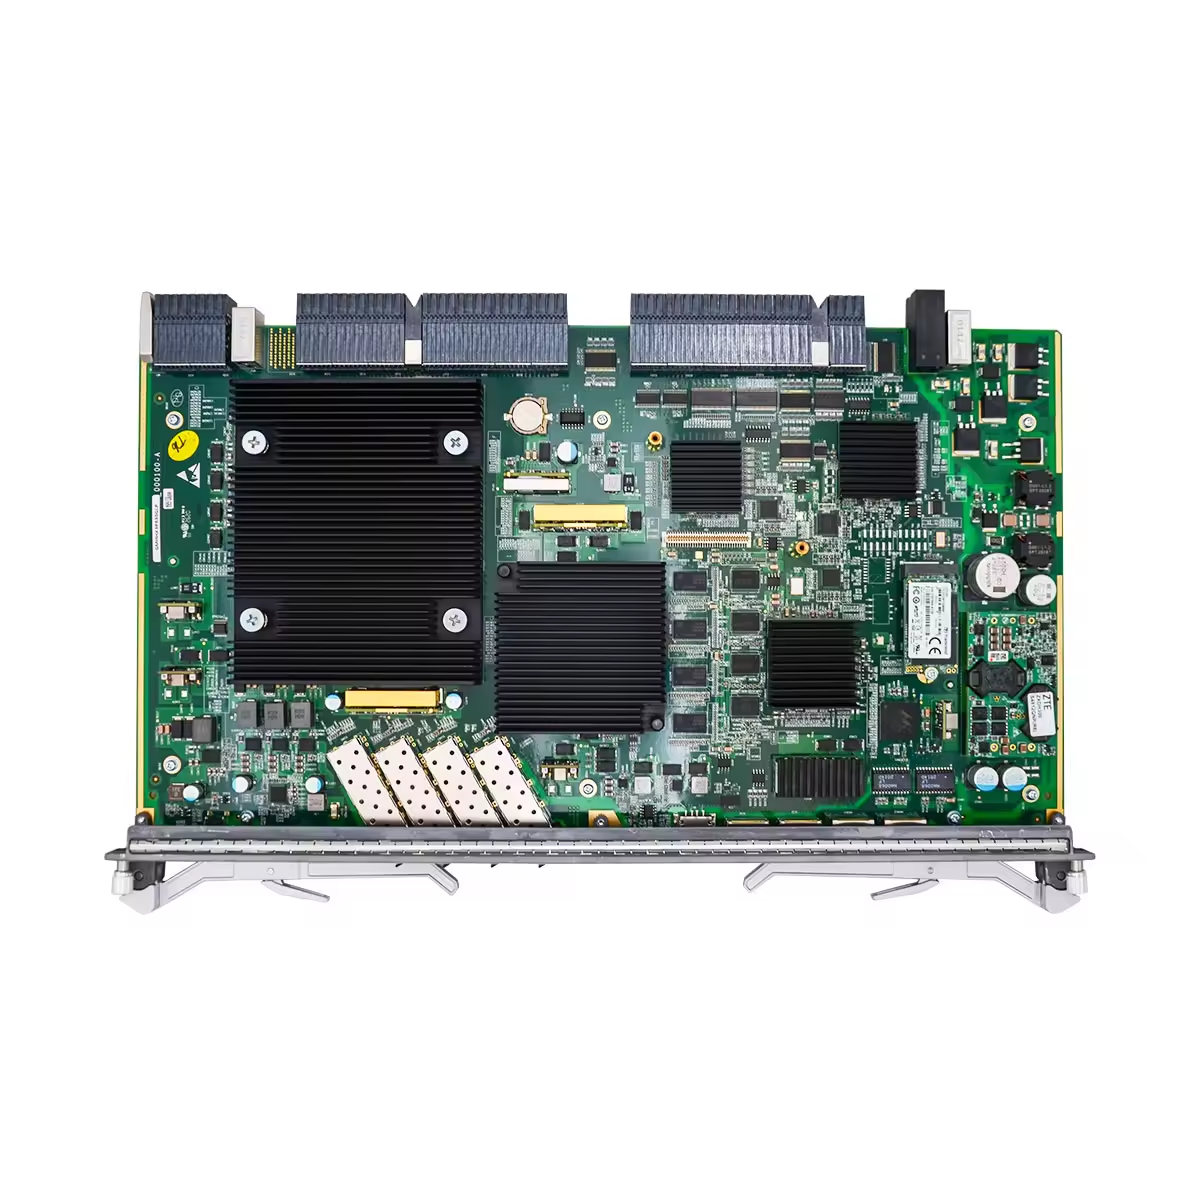 ZXA10 C600 C650 OLT 1-port 10GE uplink Switch and Control Card SFUC